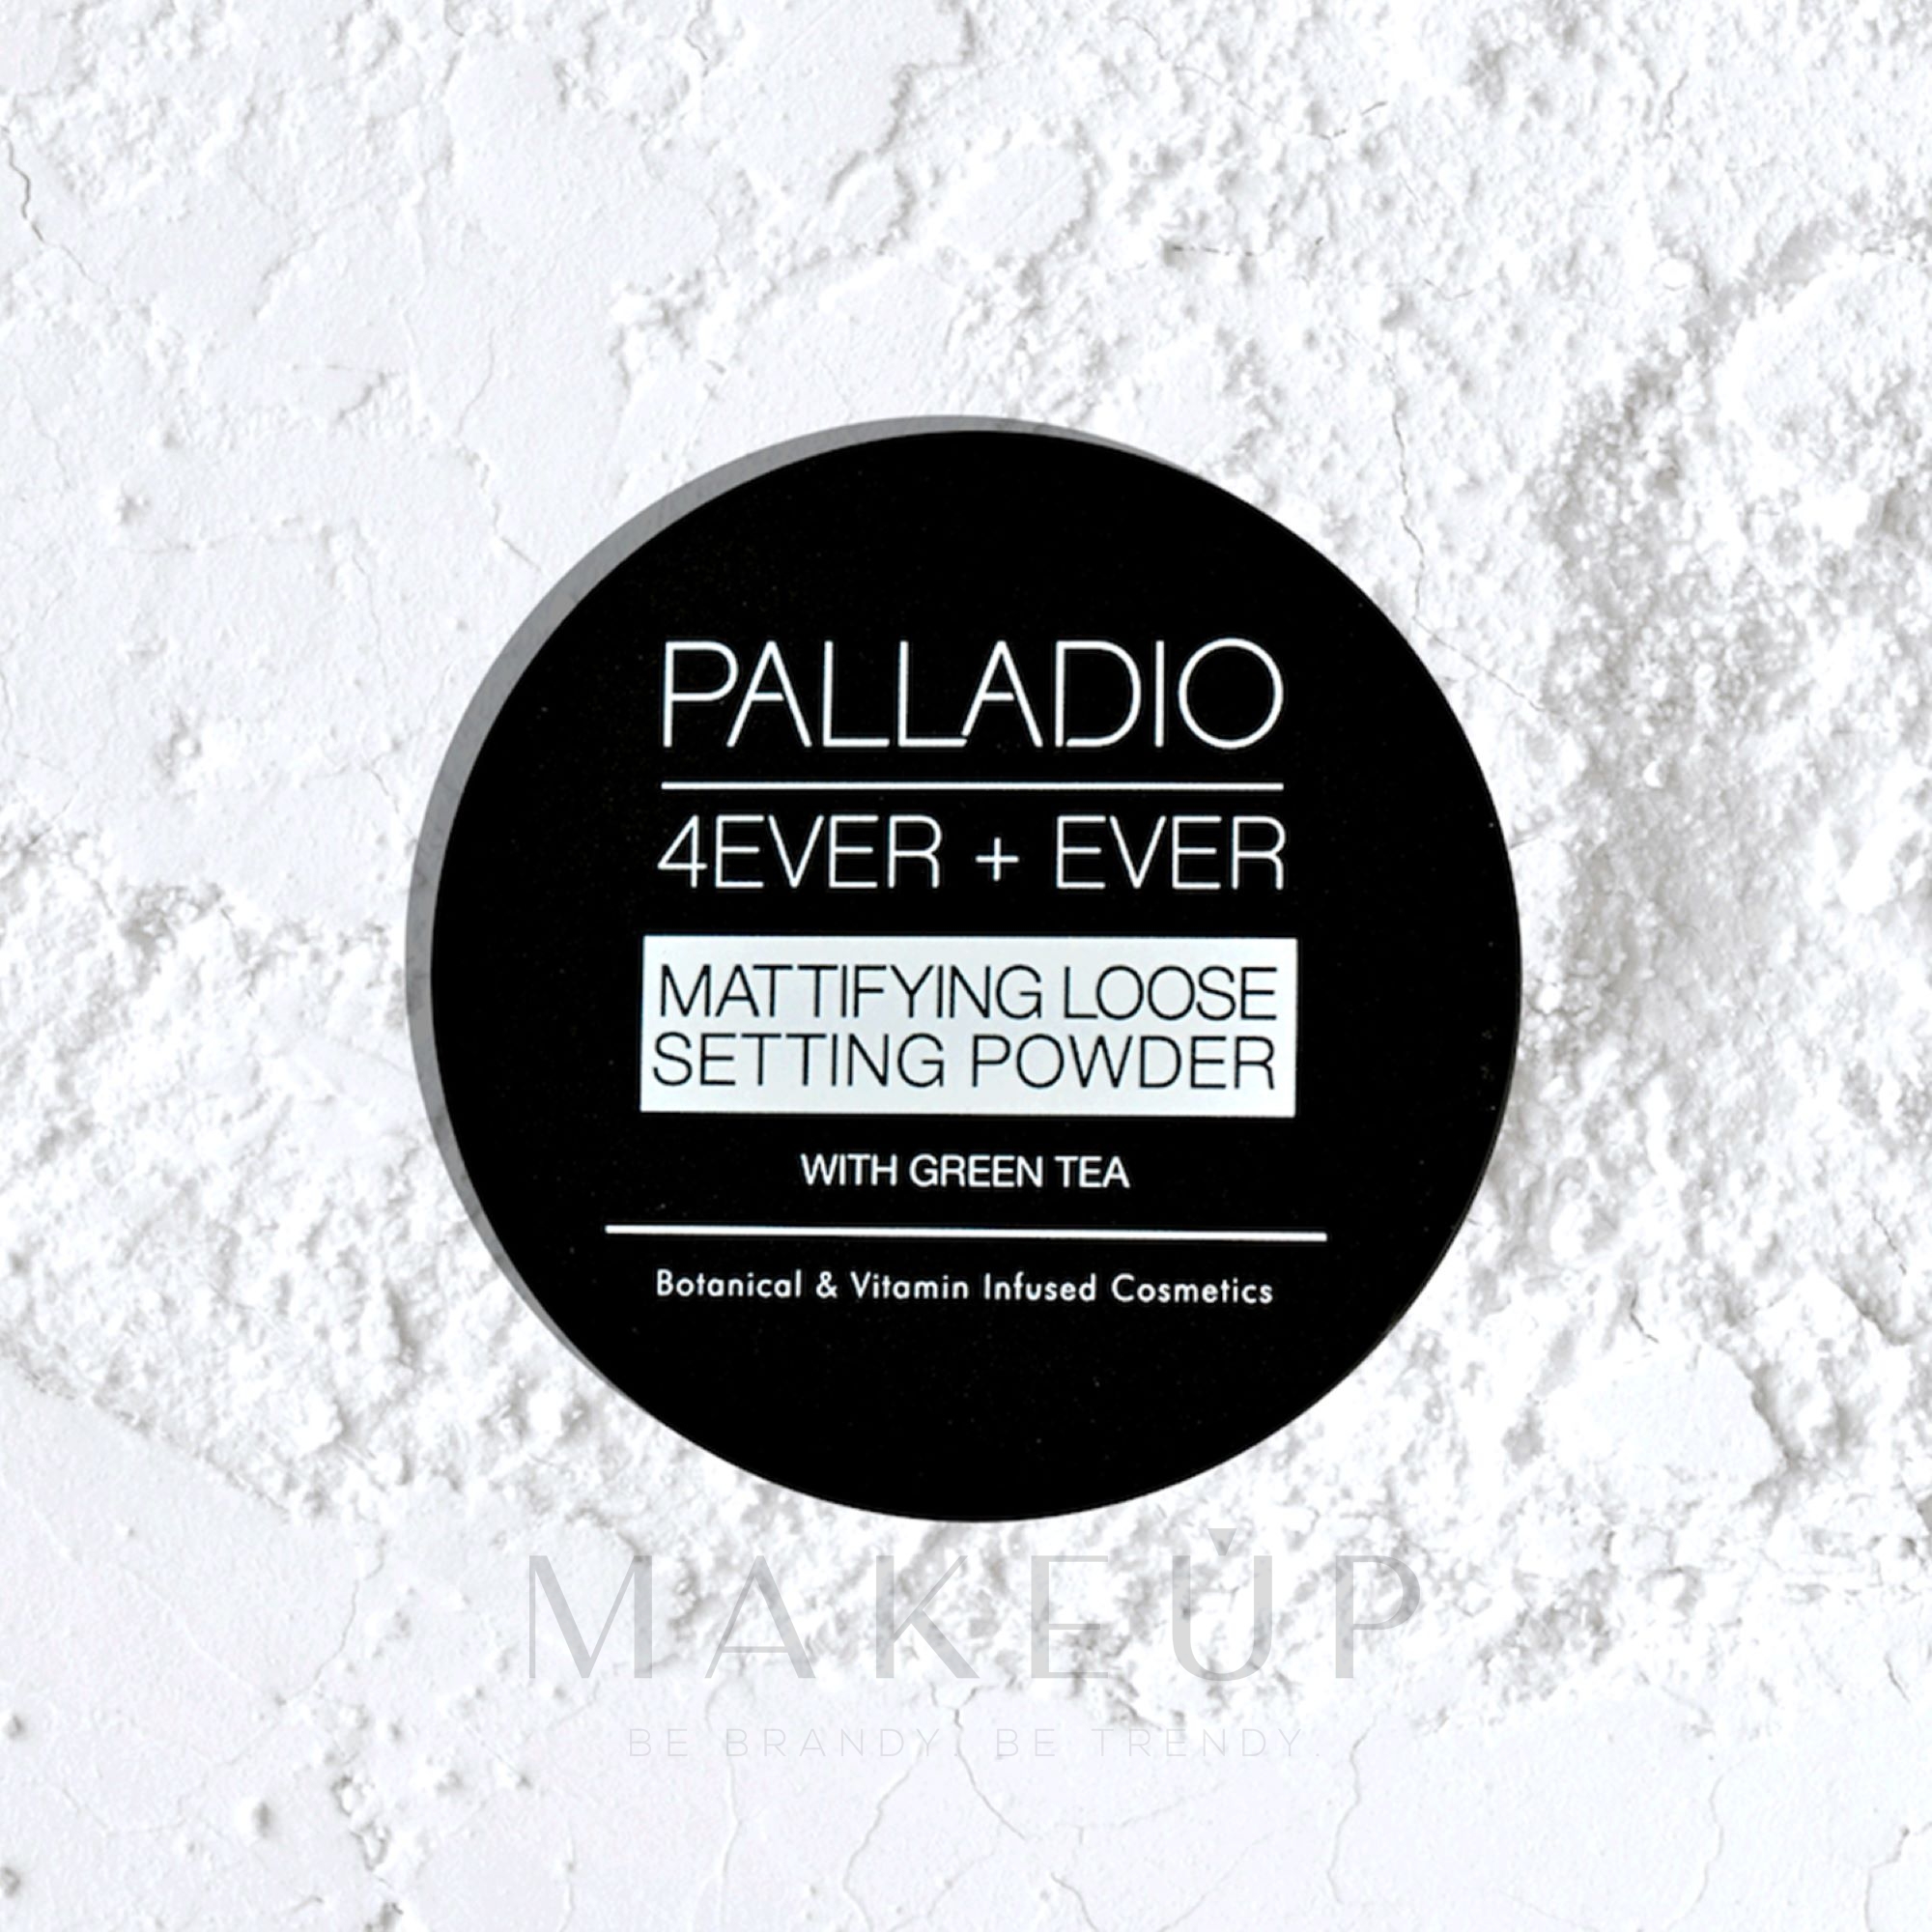 Mattierendes Puder - Palladio 4 Ever+Ever Mattifying Loose Setting Powder — Bild Translucent